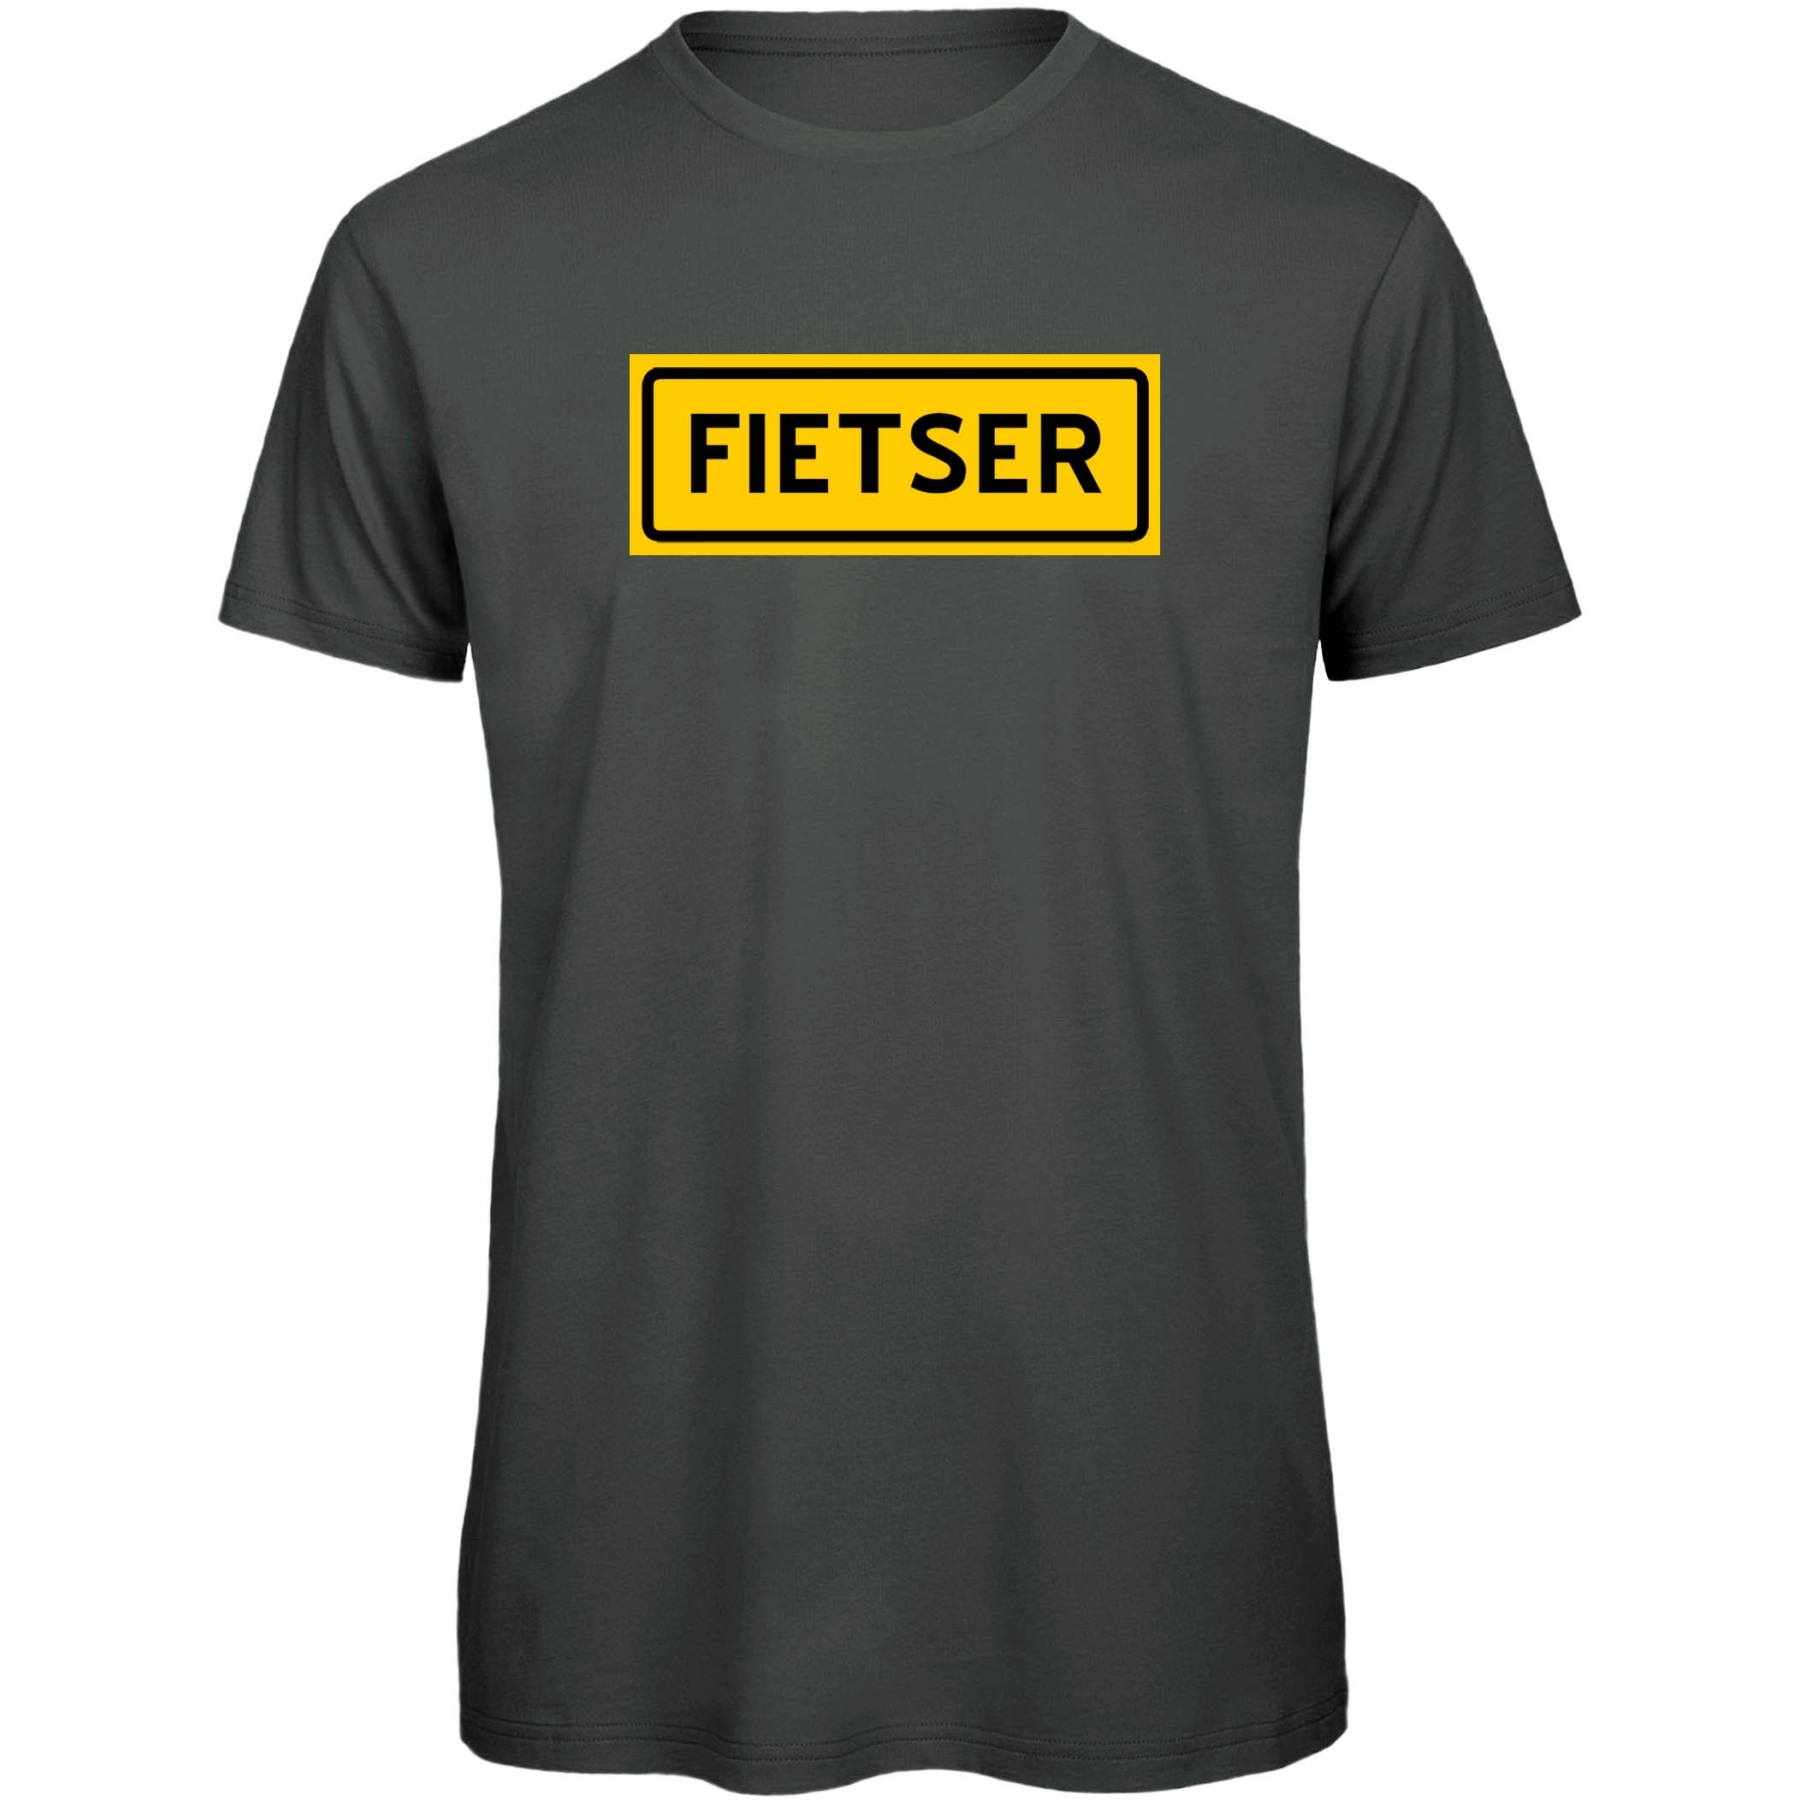 Imagen de RTTshirts Camiseta Bicicleta - Fietser - gris oscuro